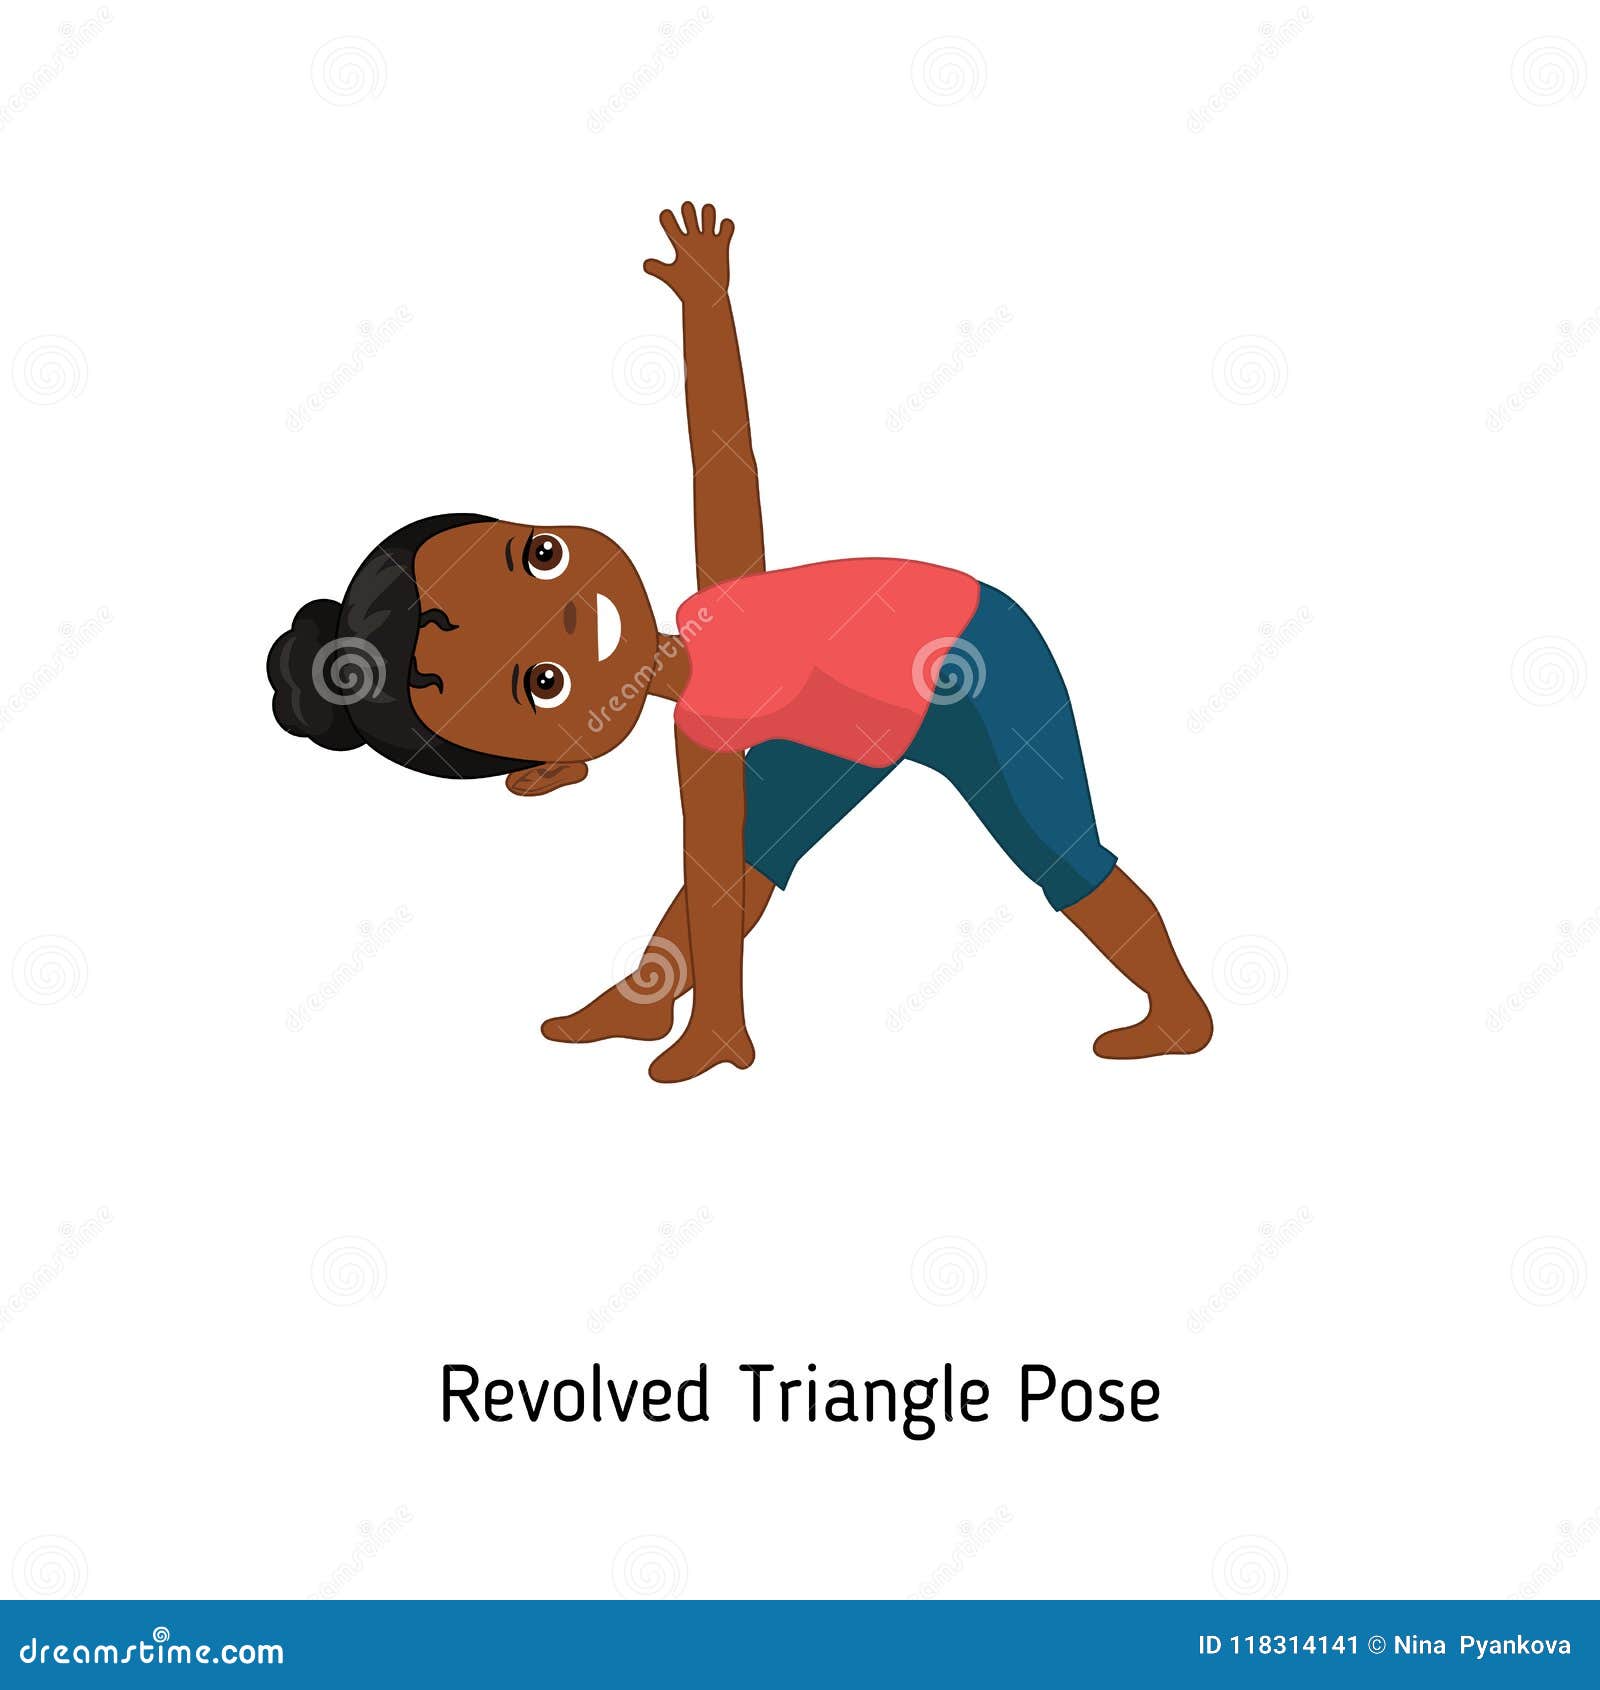 How to do Parivrtta Trikonasana (Revolved Triangle Pose) - YouTube